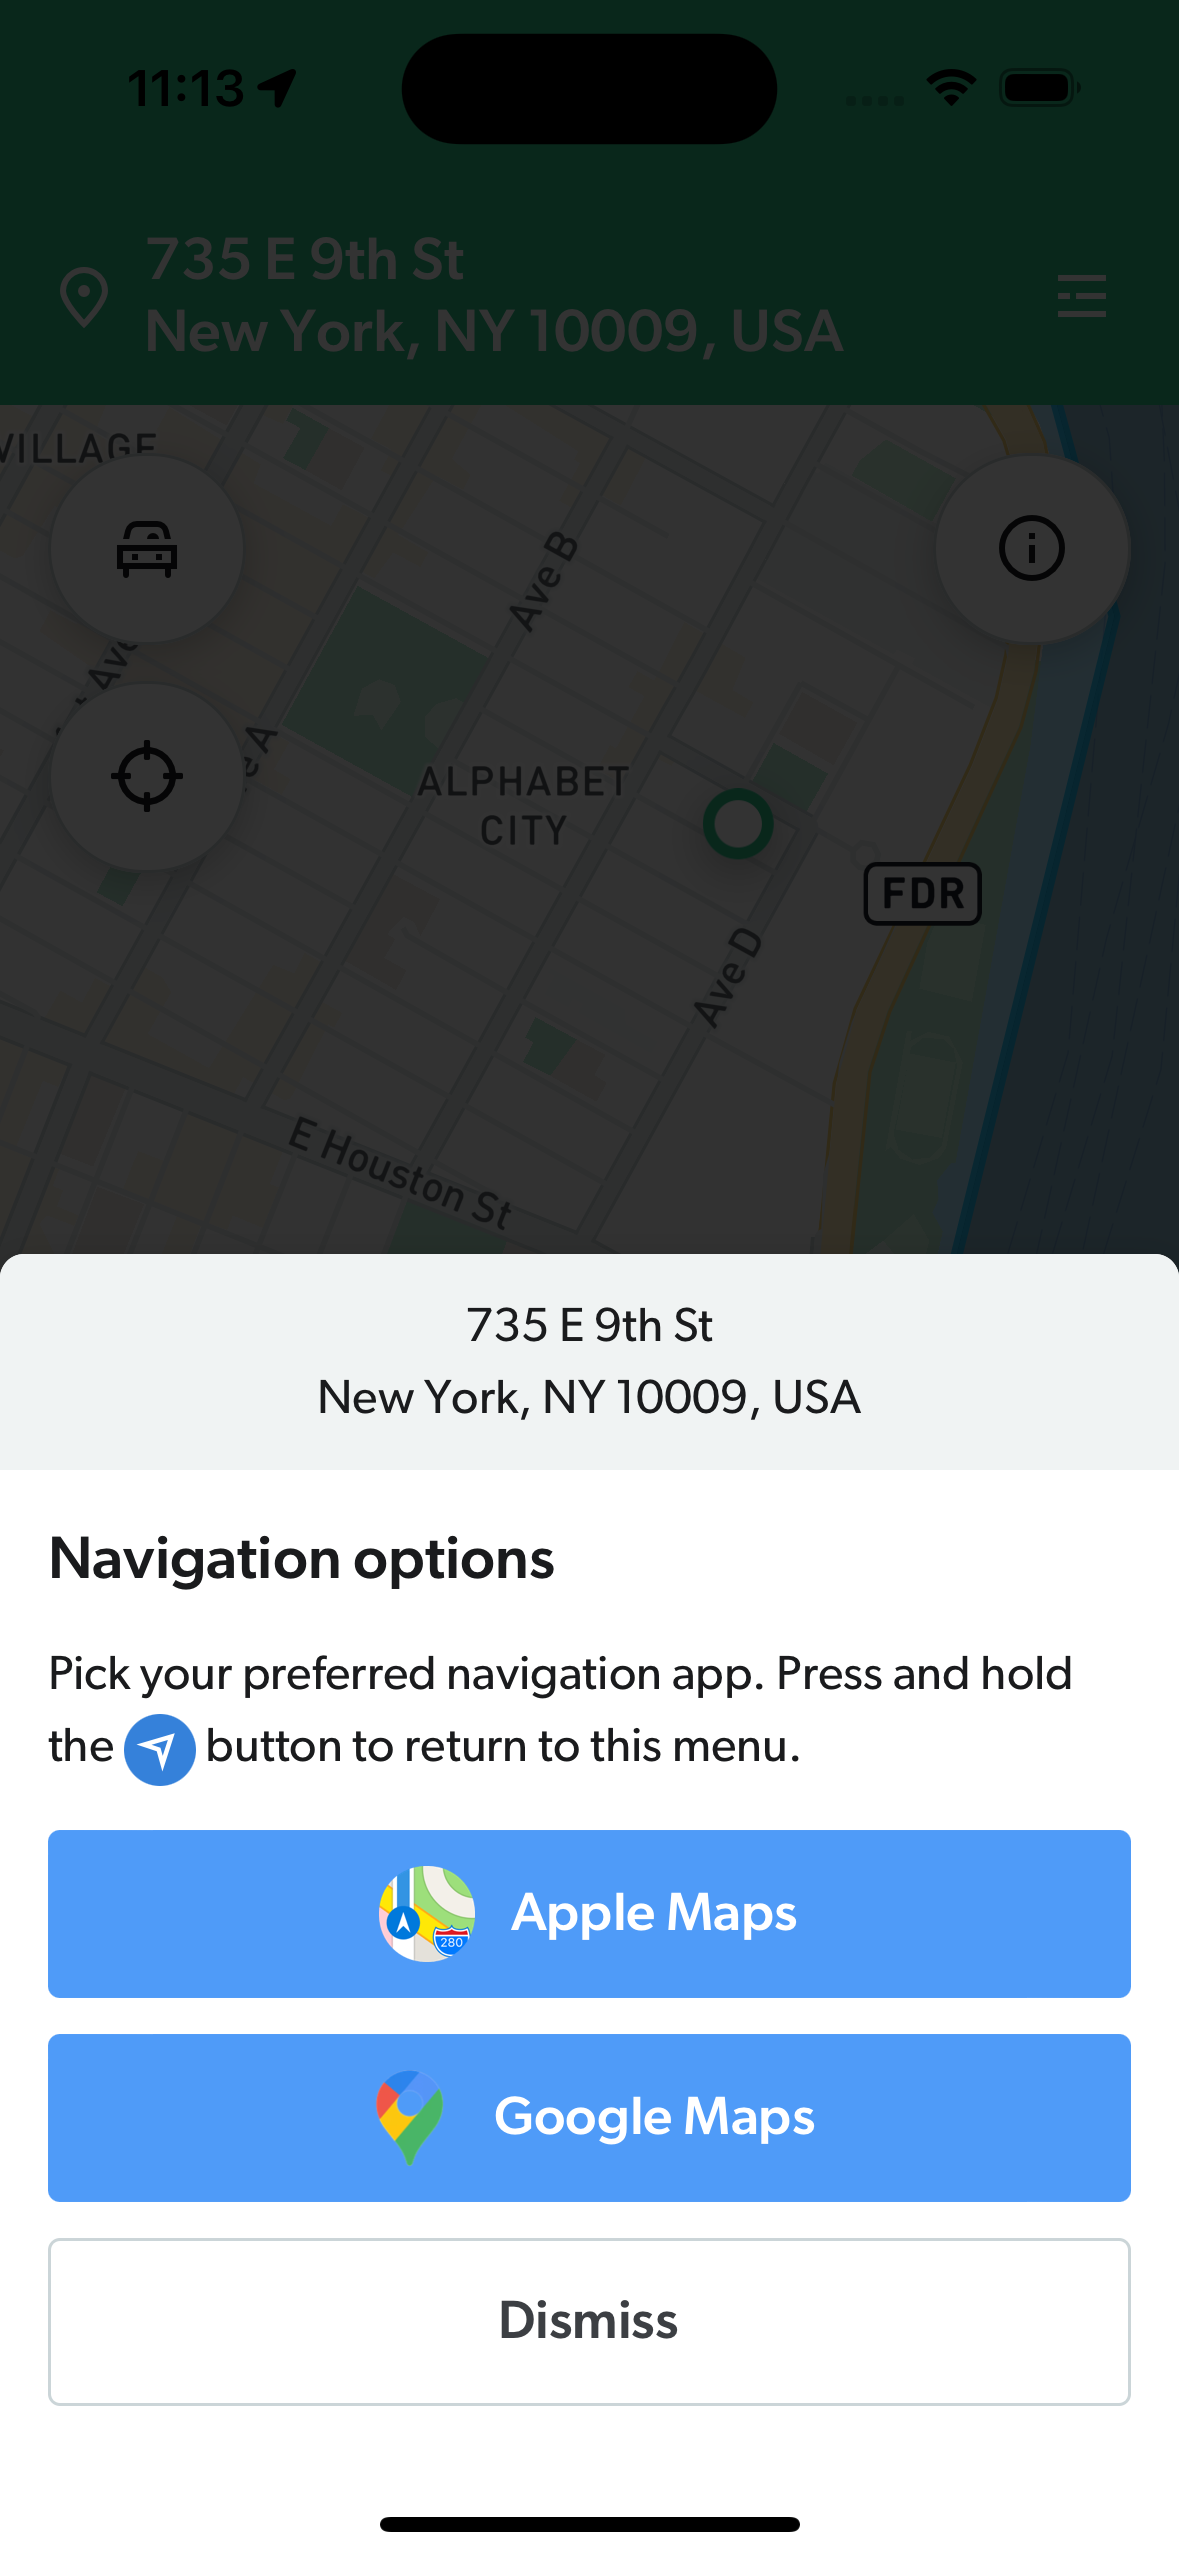 The driver app navigate menu.